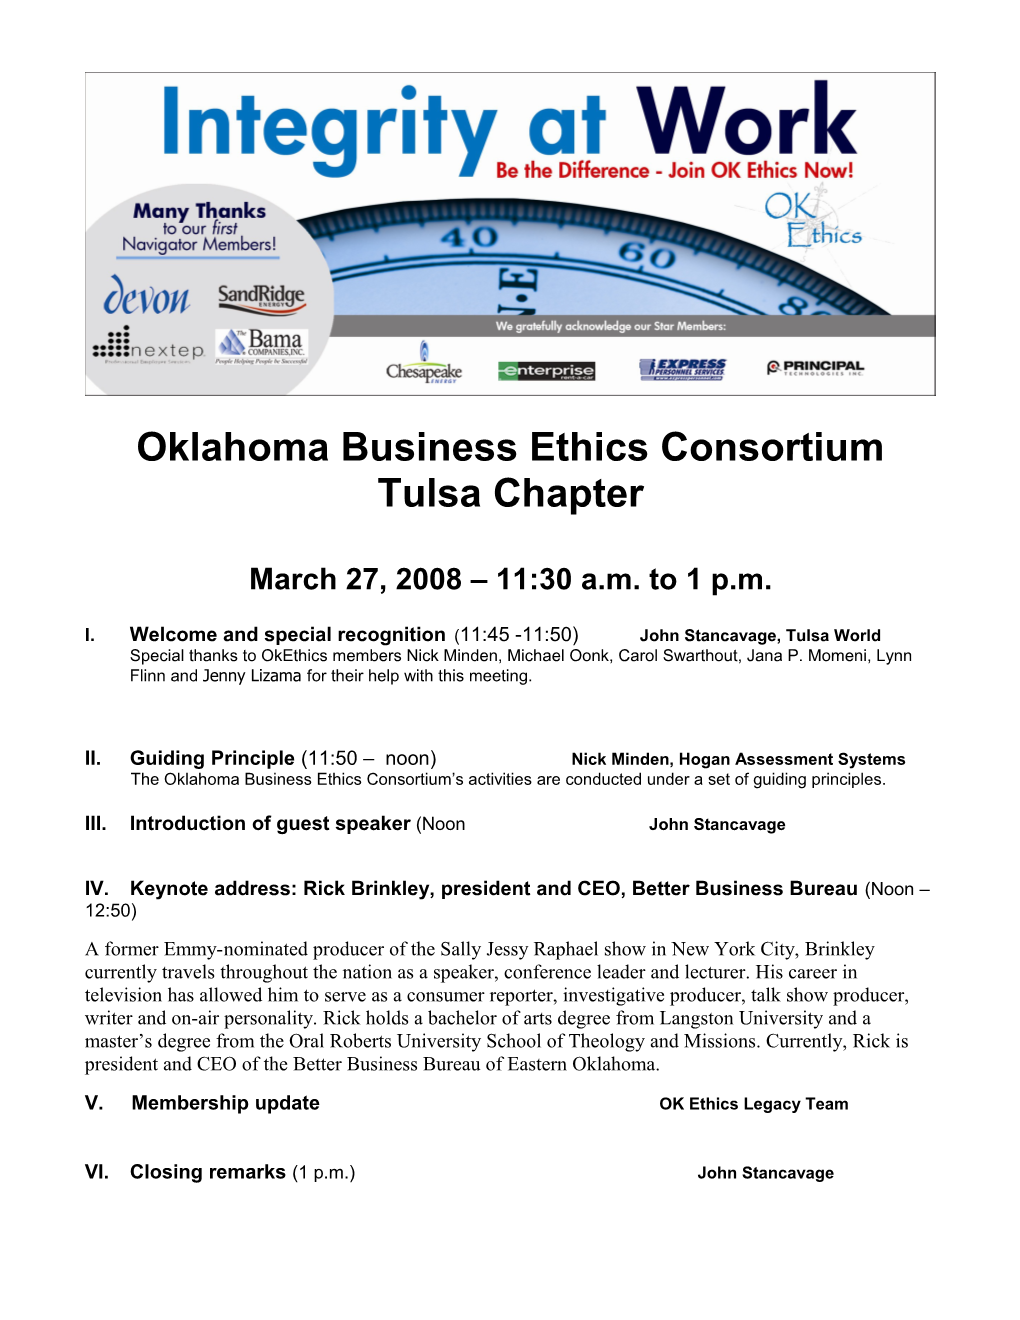 Oklahoma Business Ethics Consortium s1